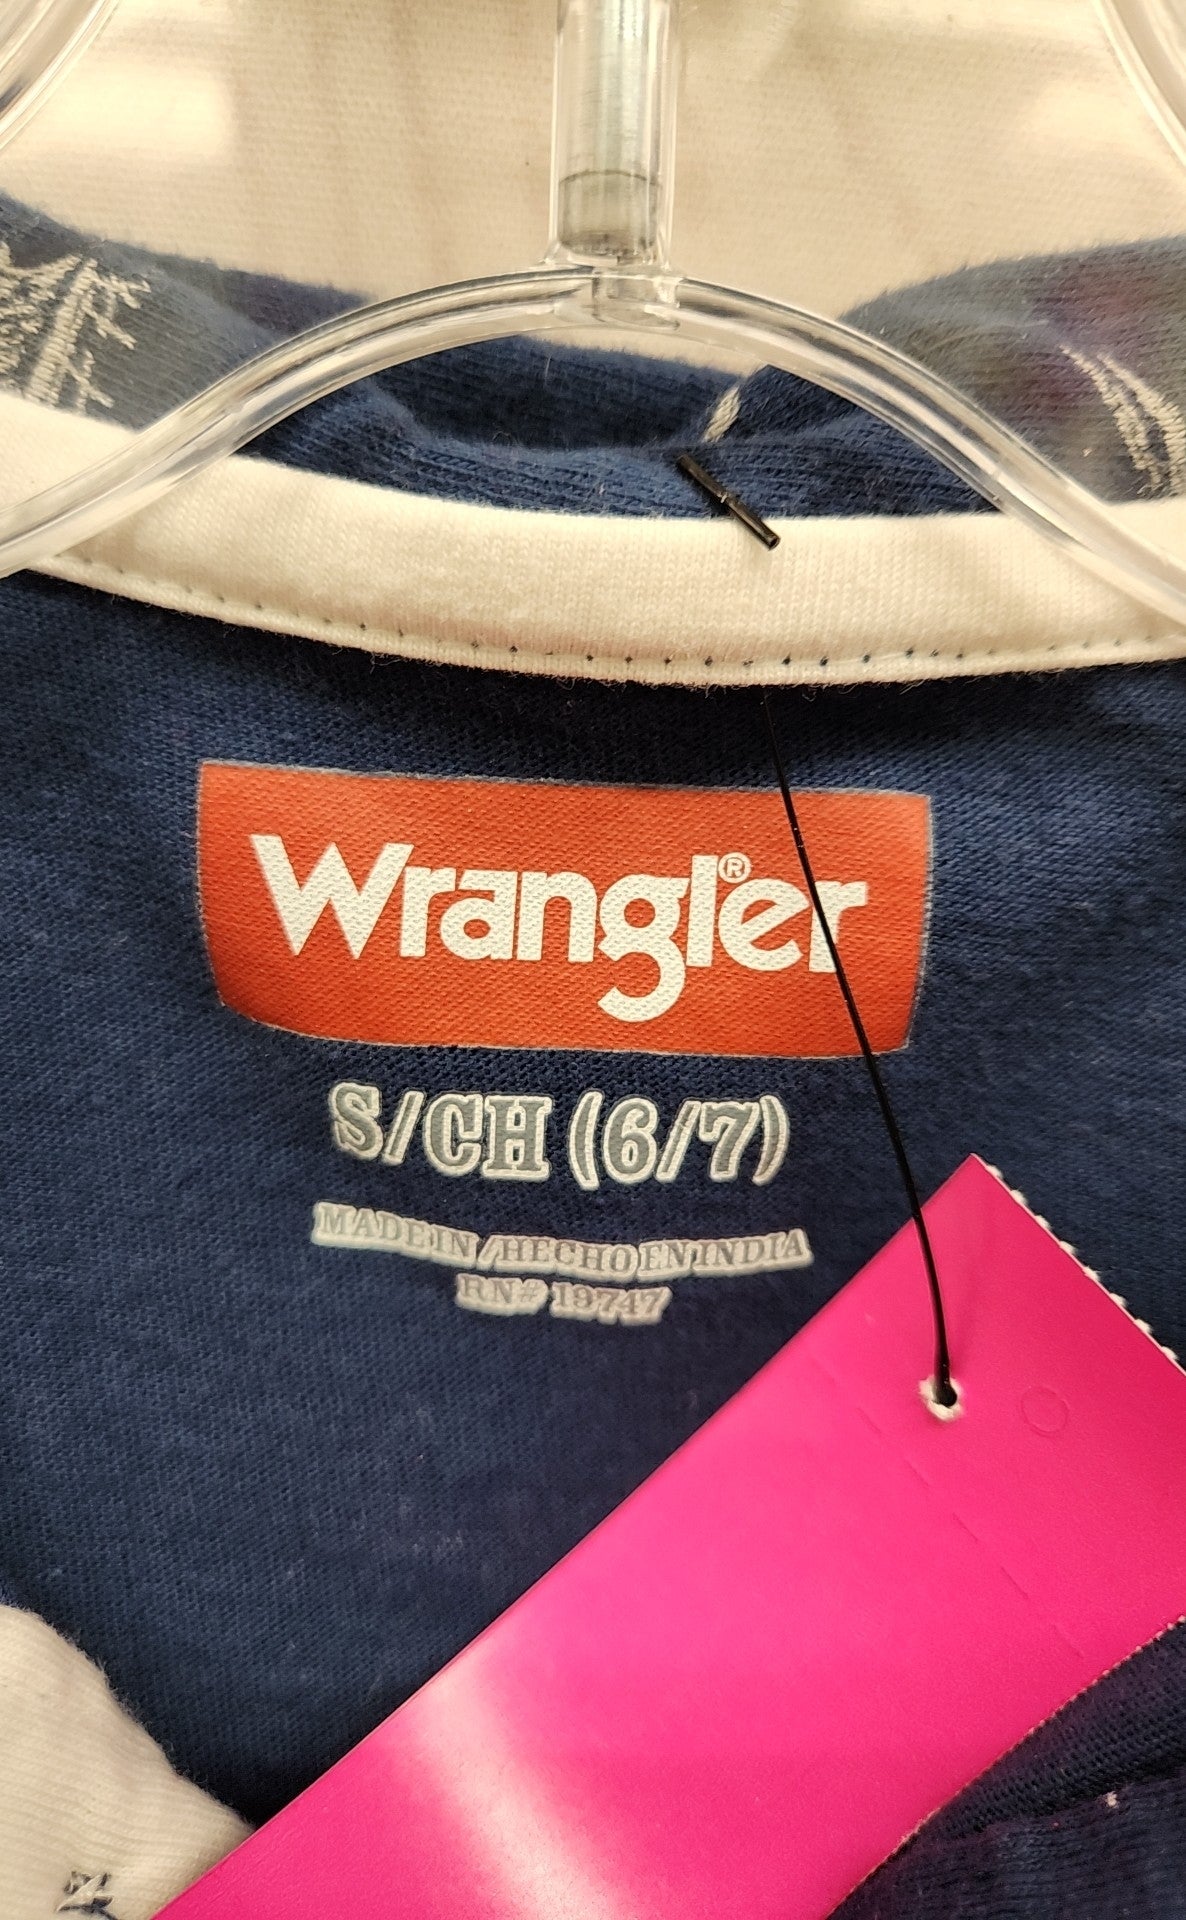 Wrangler Boy's Size 6/7 Blue Shirt